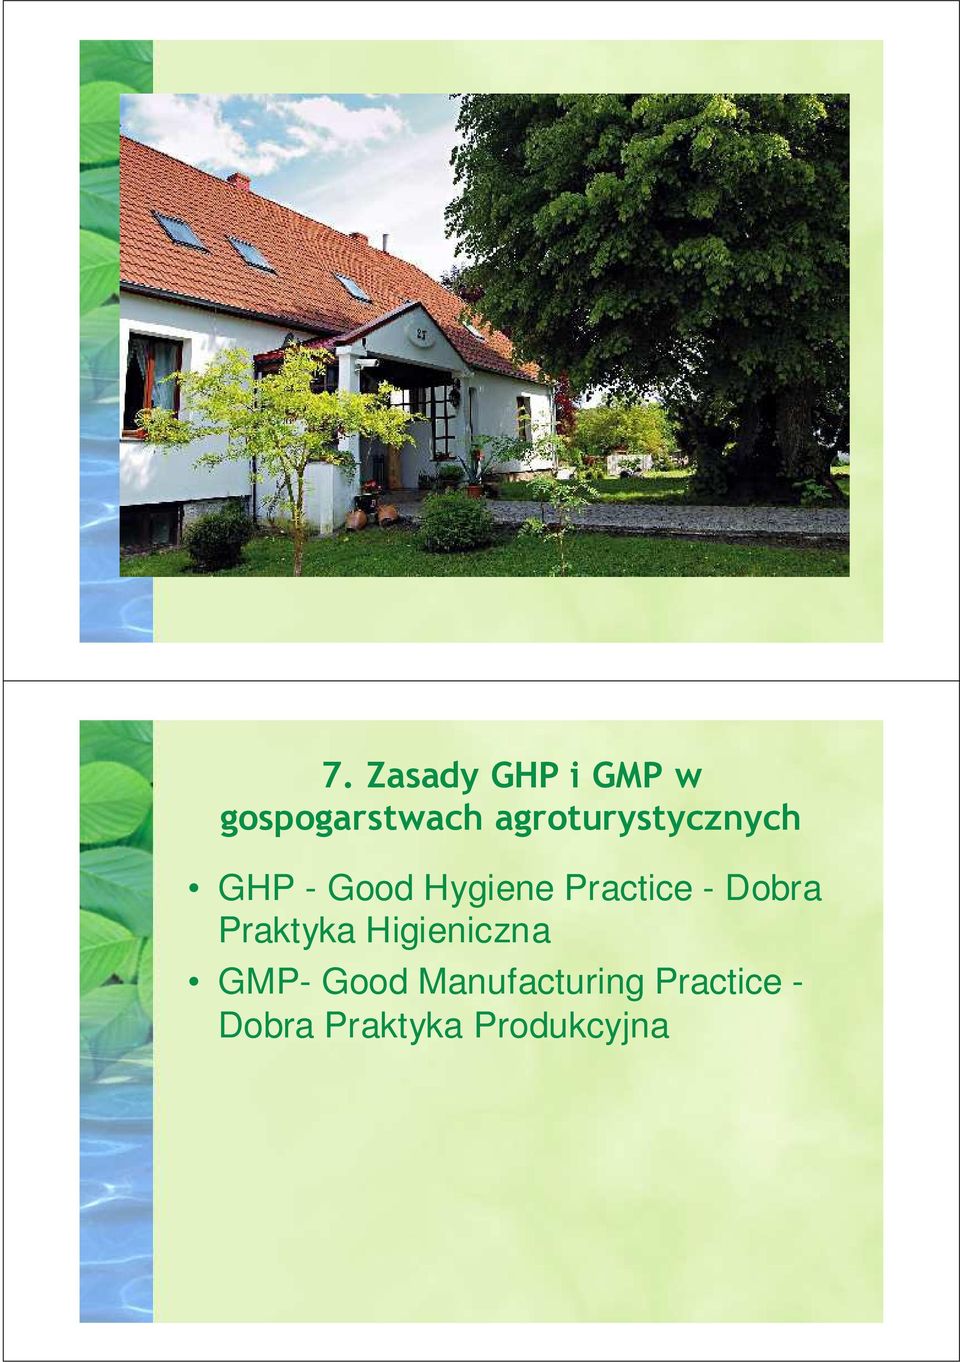 Practice - Dobra Praktyka Higieniczna GMP-